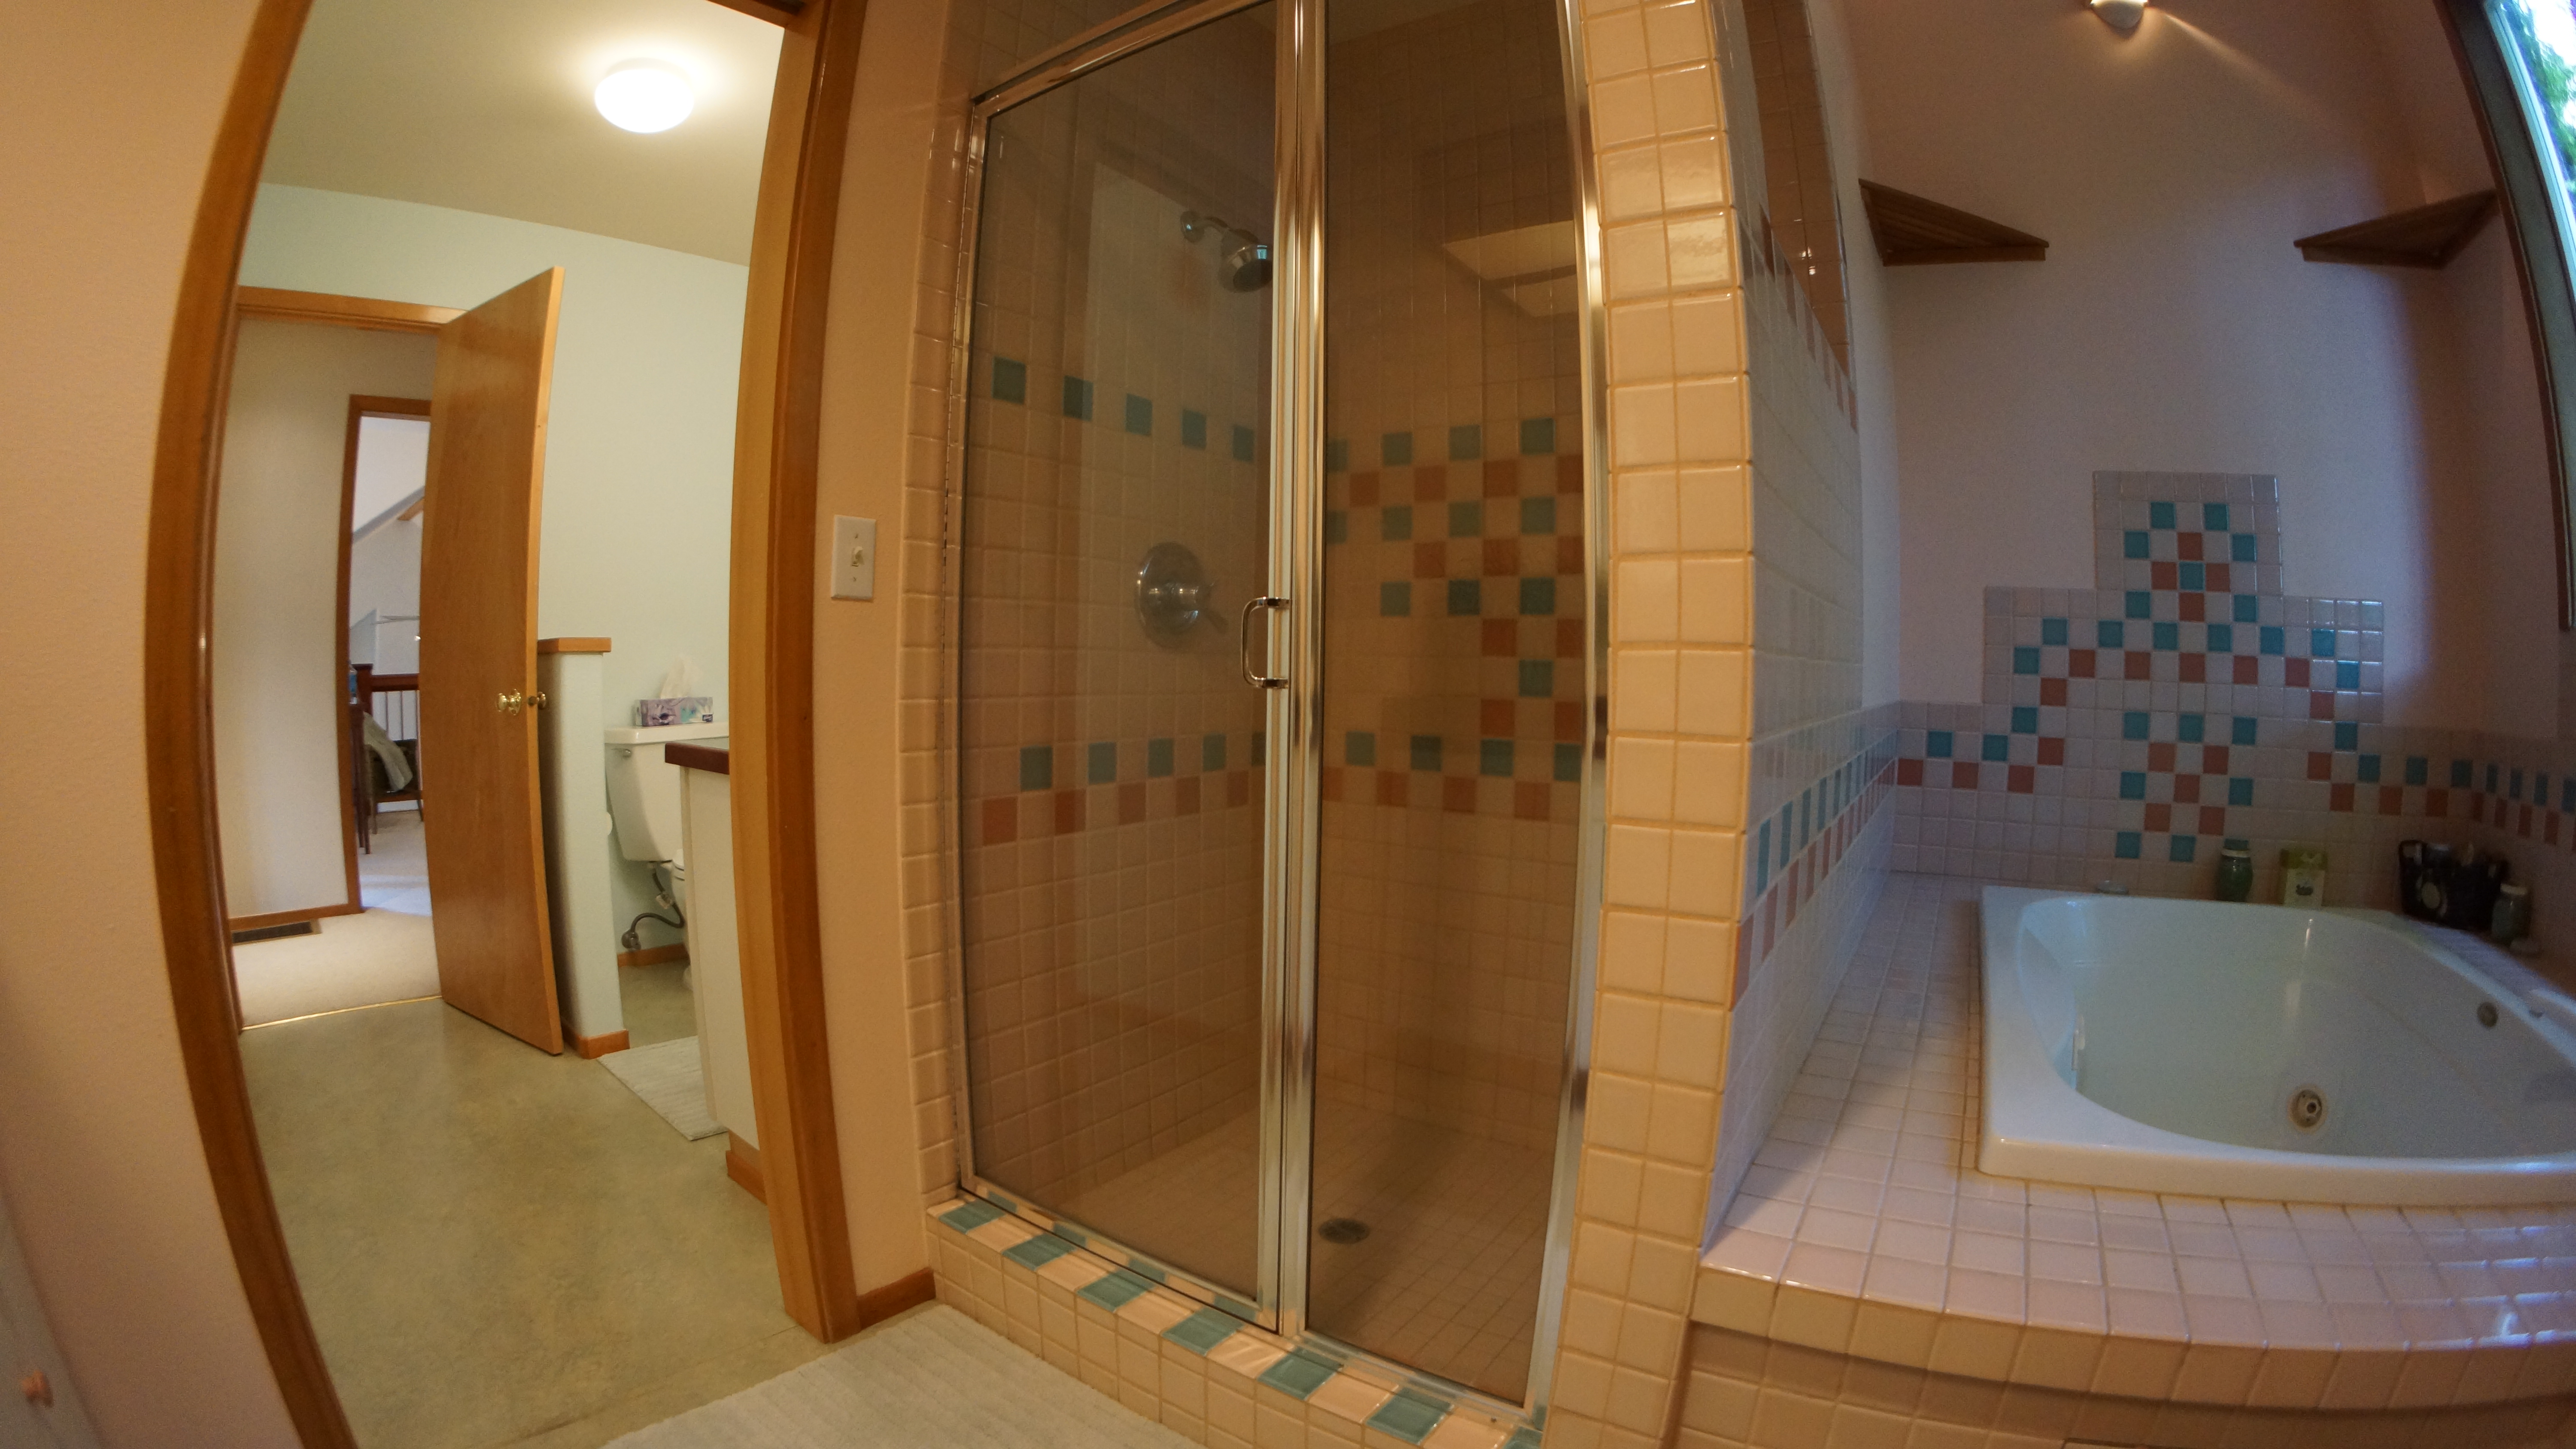 Bathroom, Shower and genuine Jacuzzi Tub.